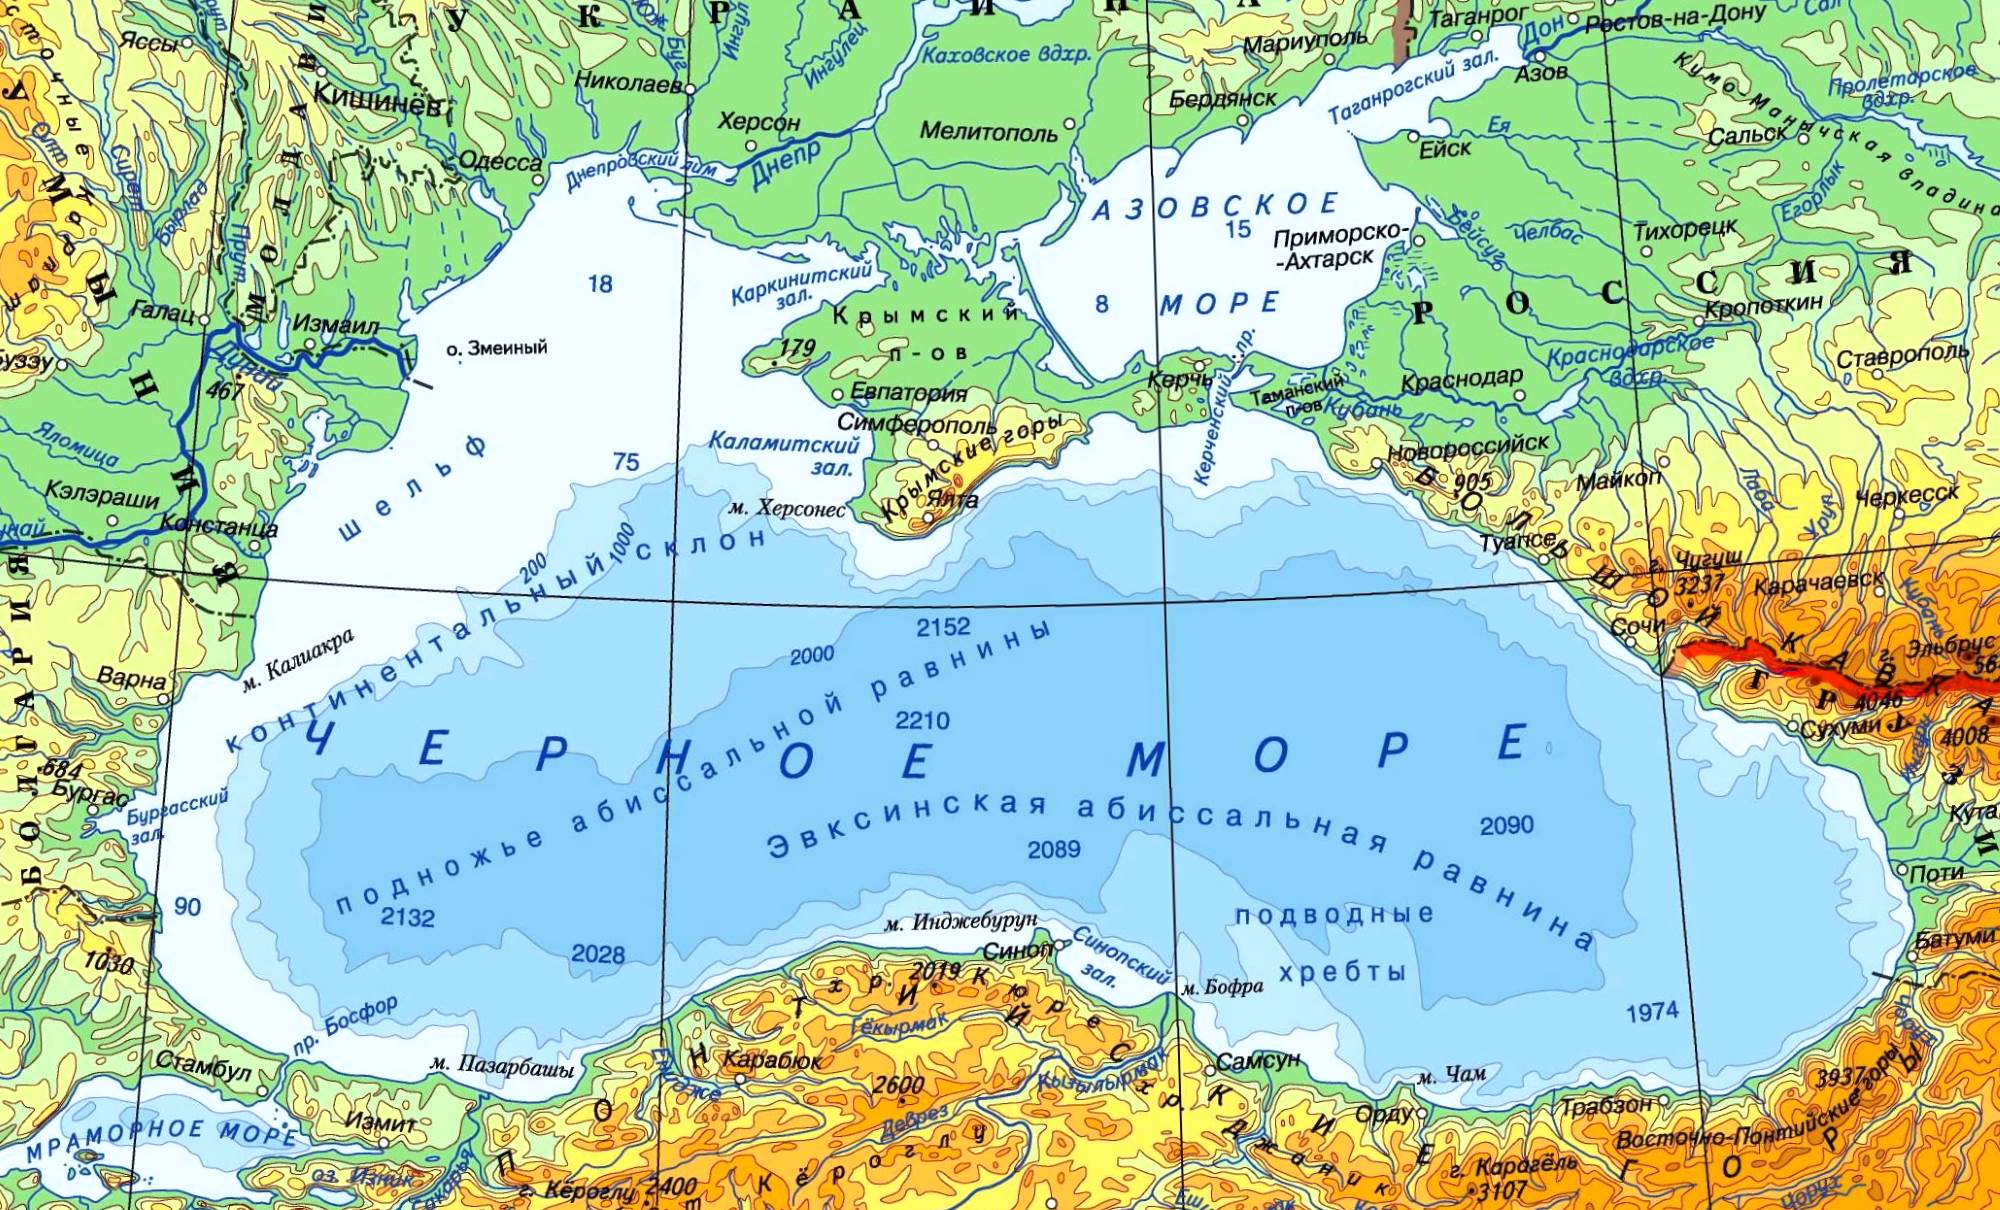 Shoreline map of the Black Sea